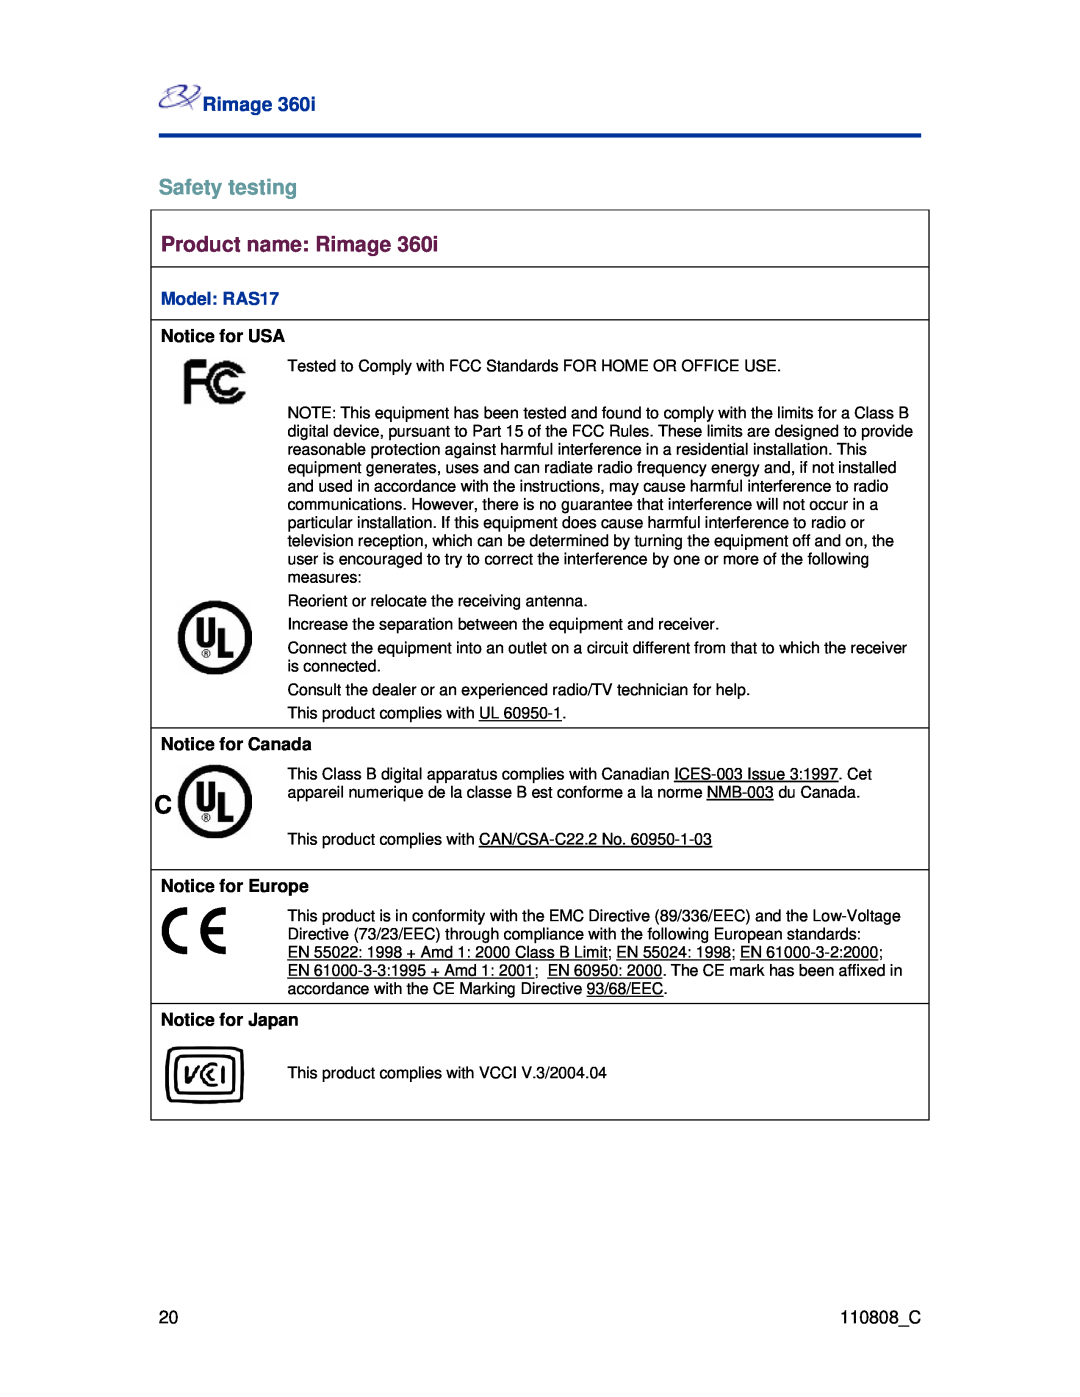 Rimage 360i manual Safety testing, Product name Rimage, Model RAS17 